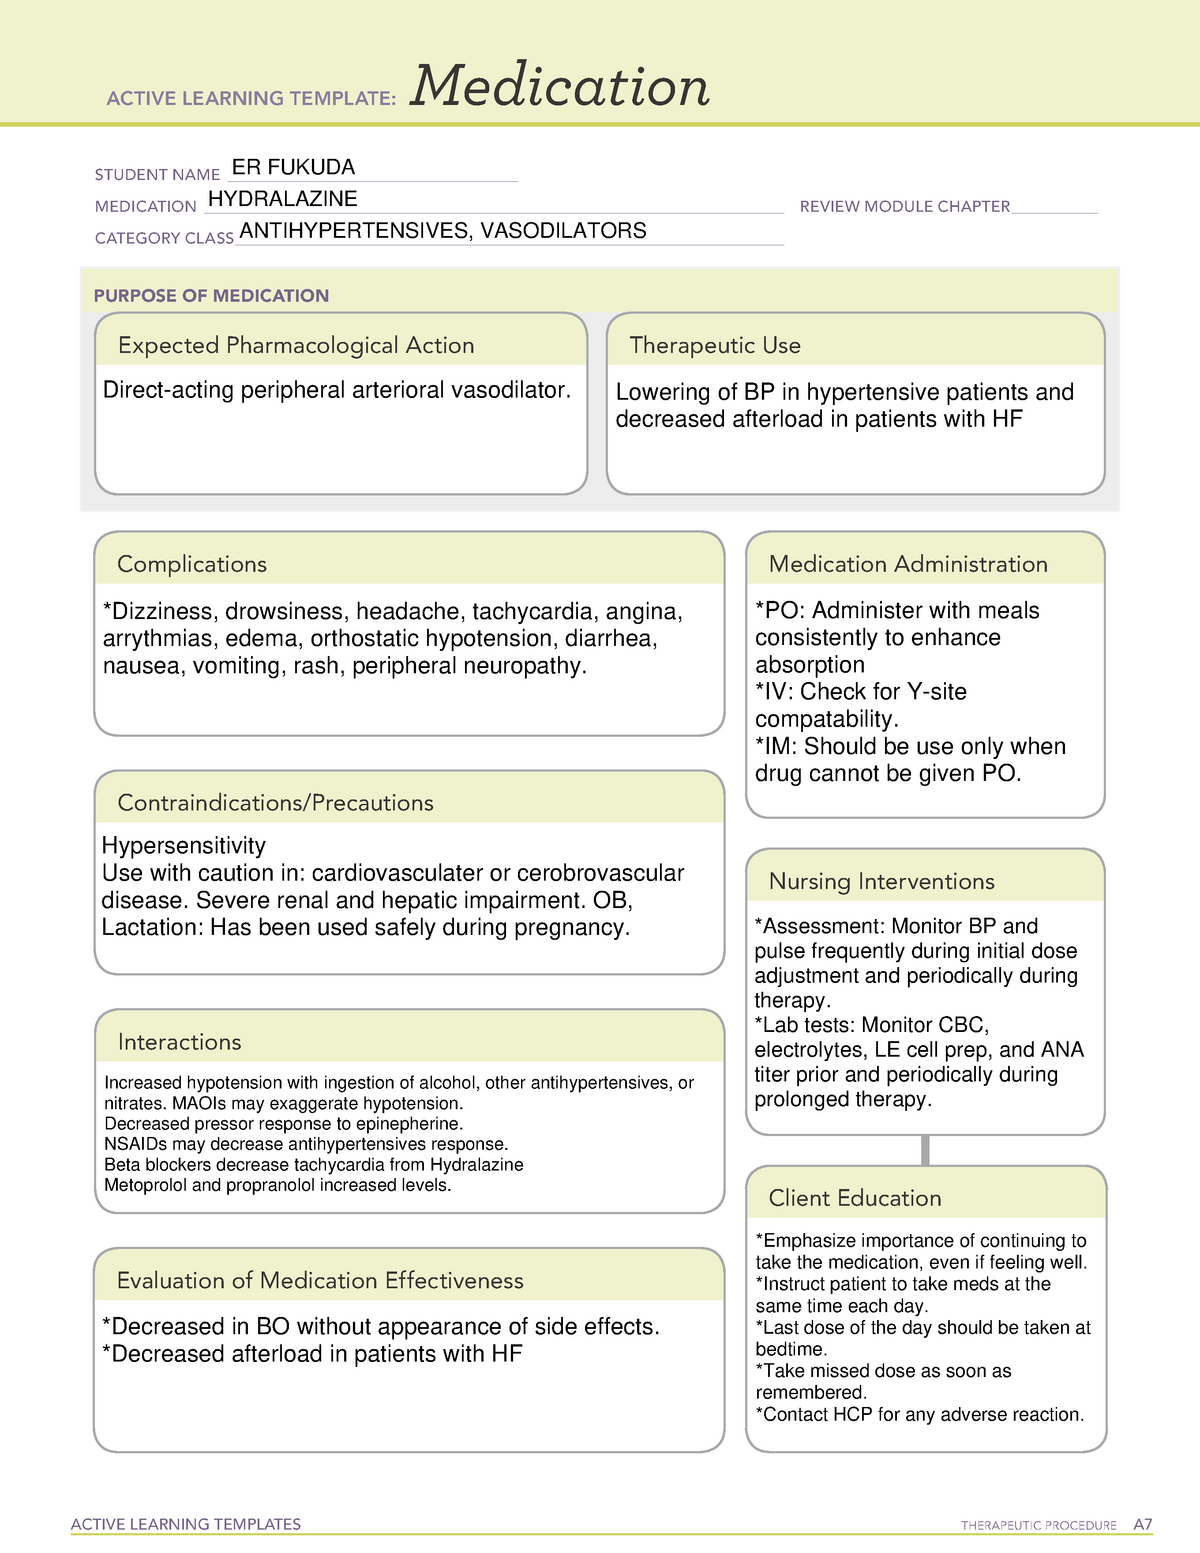 metoprolol-medication-template